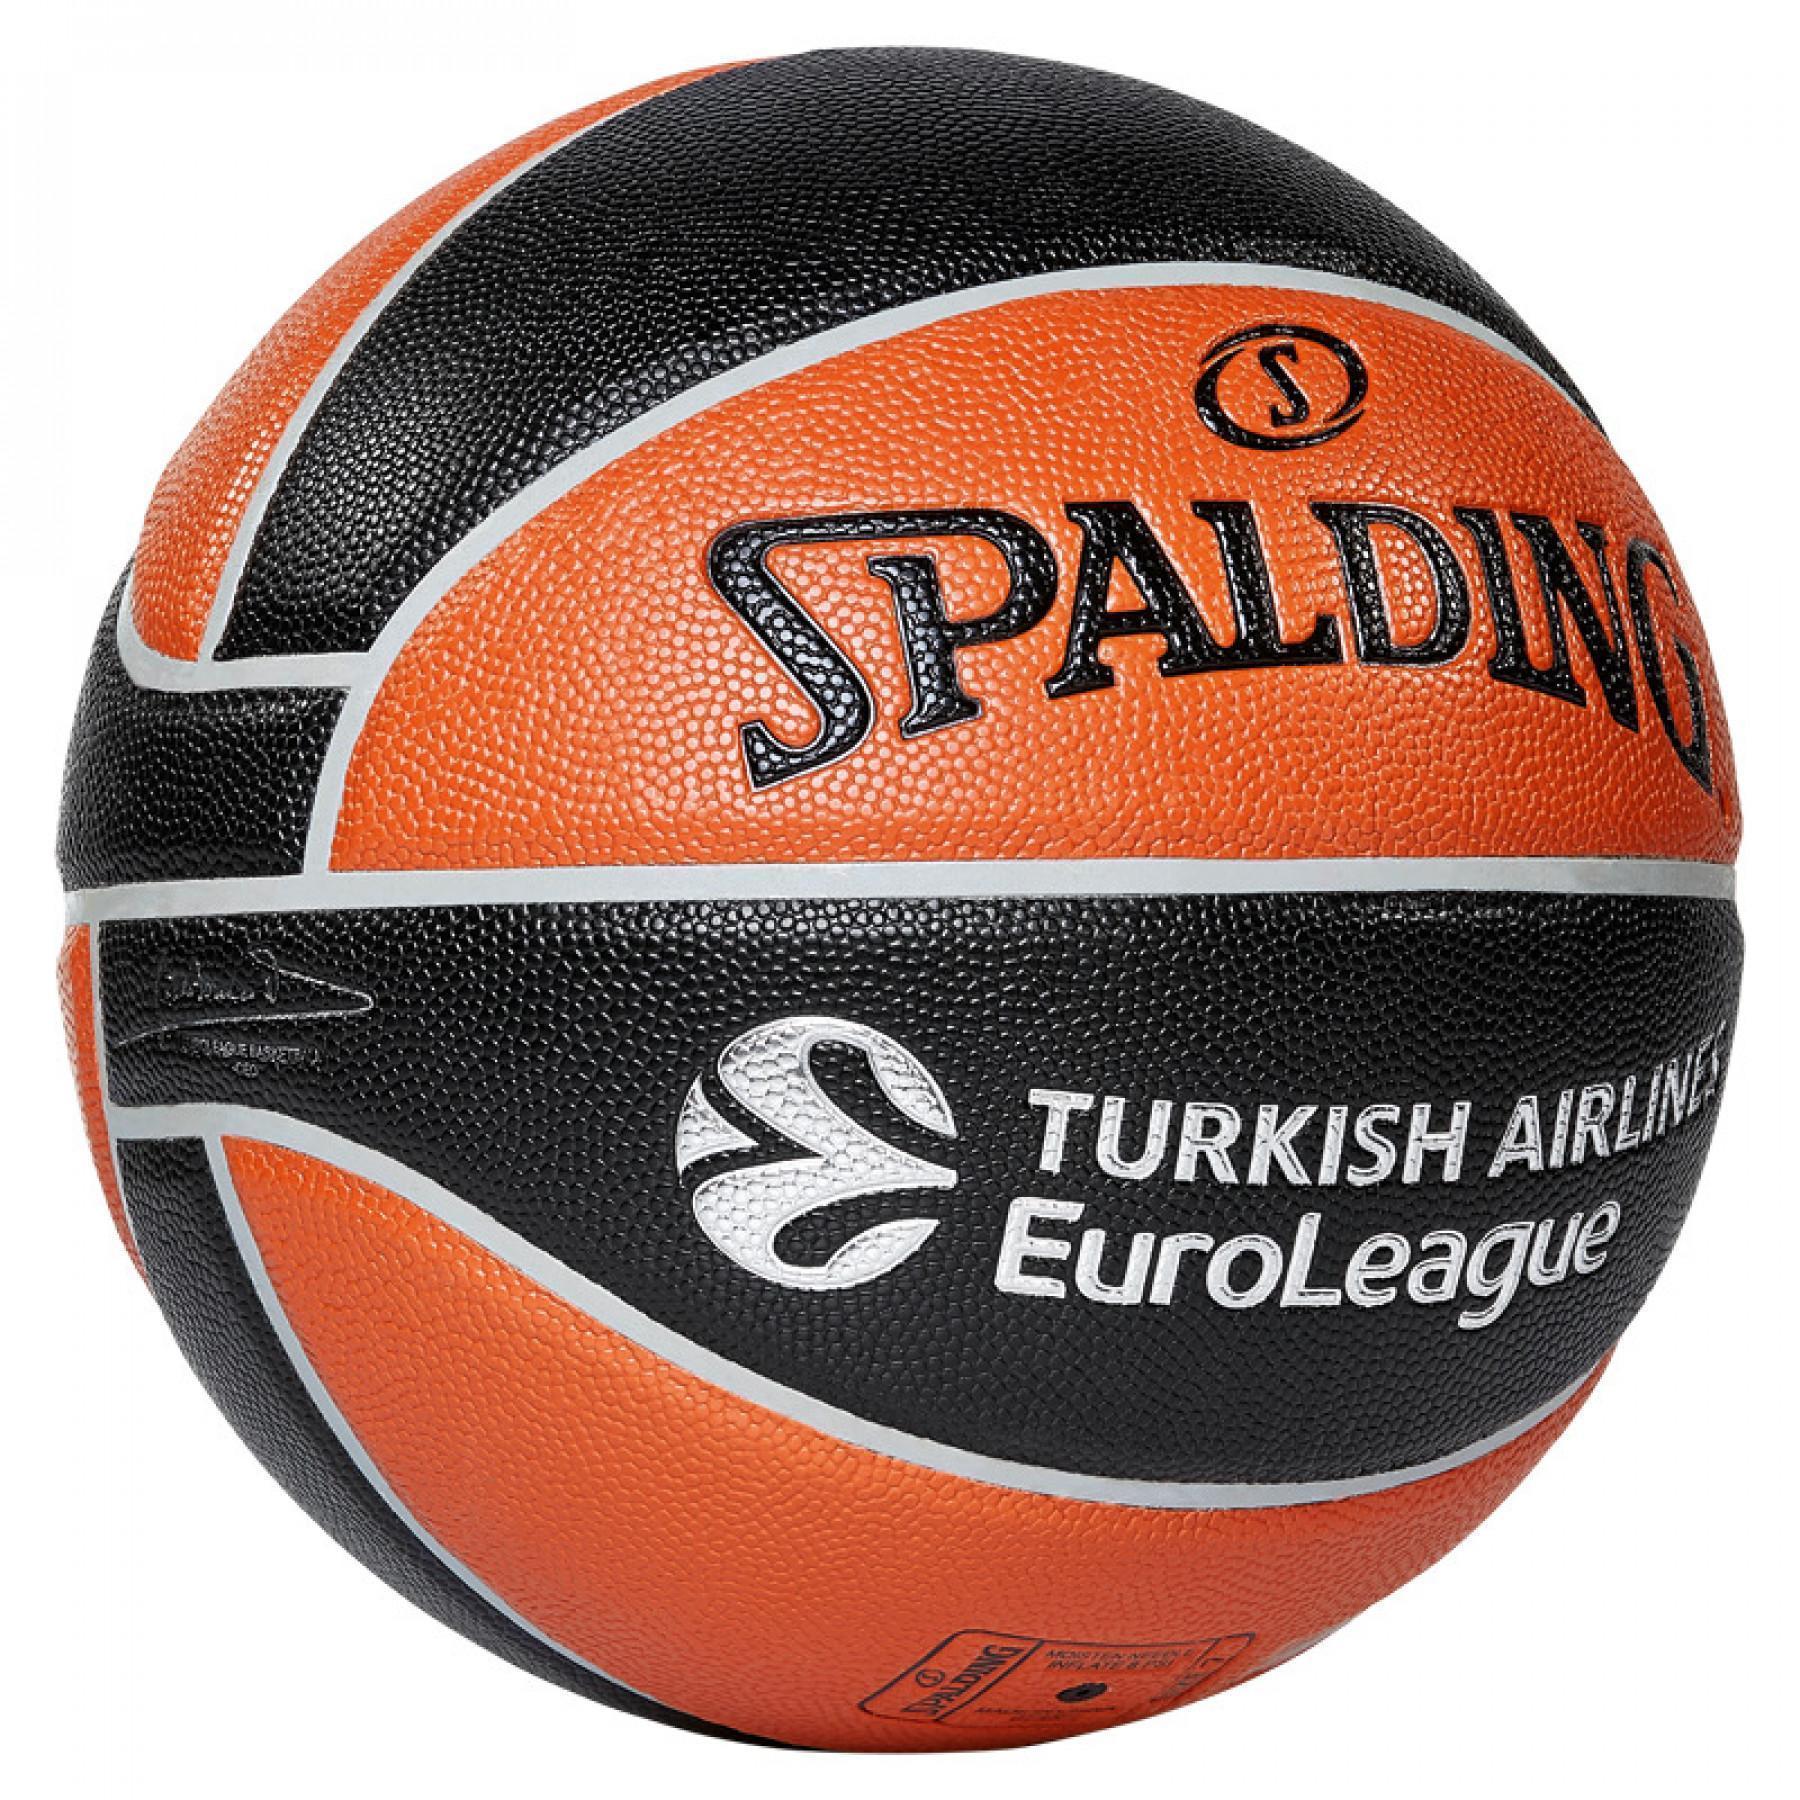 Balão Spalding Euroleague Tf 500 In/out (84-002z)